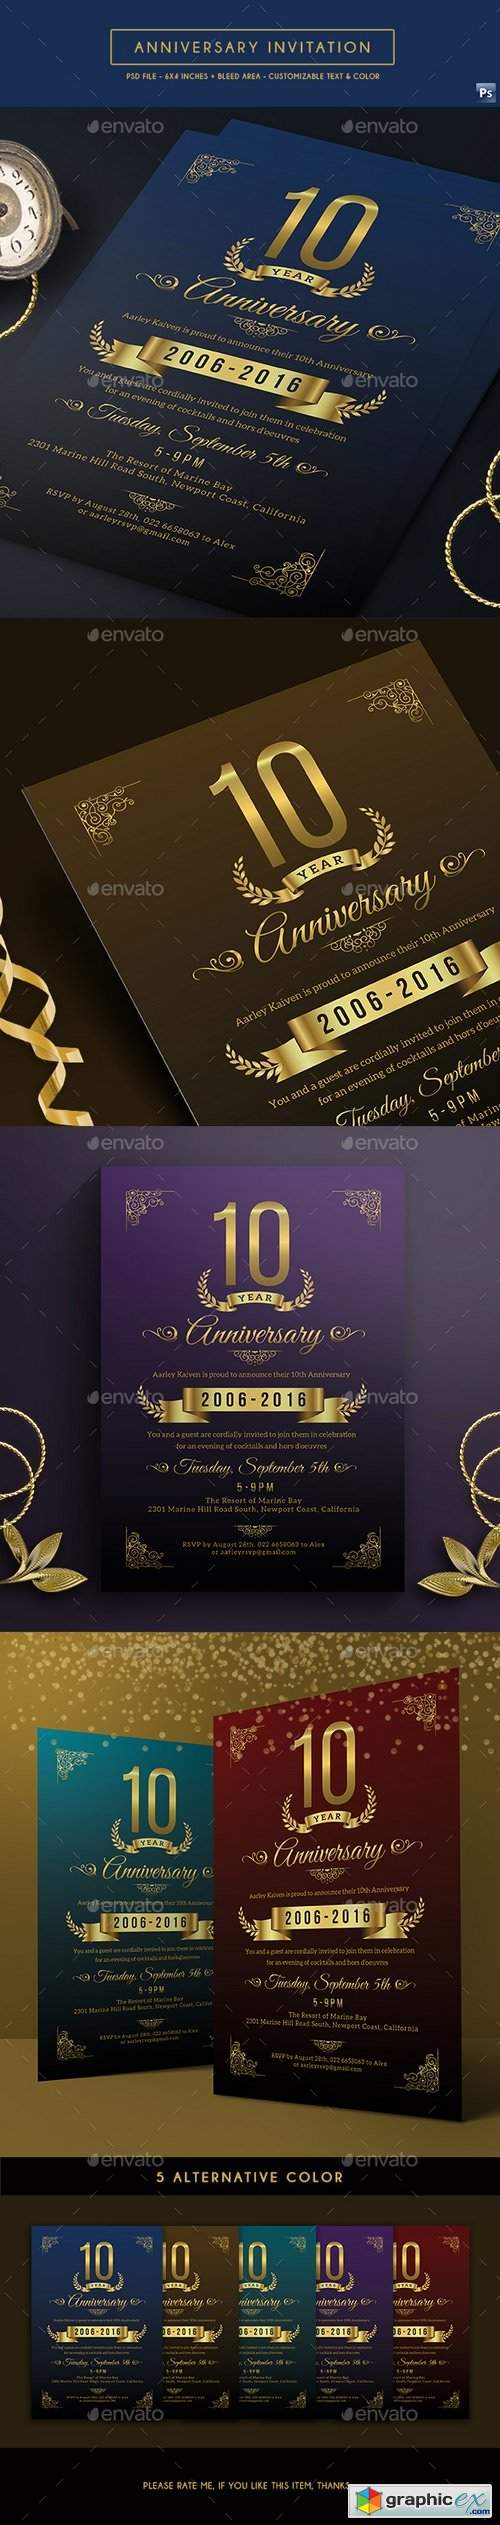 Anniversary Invitation 17546141